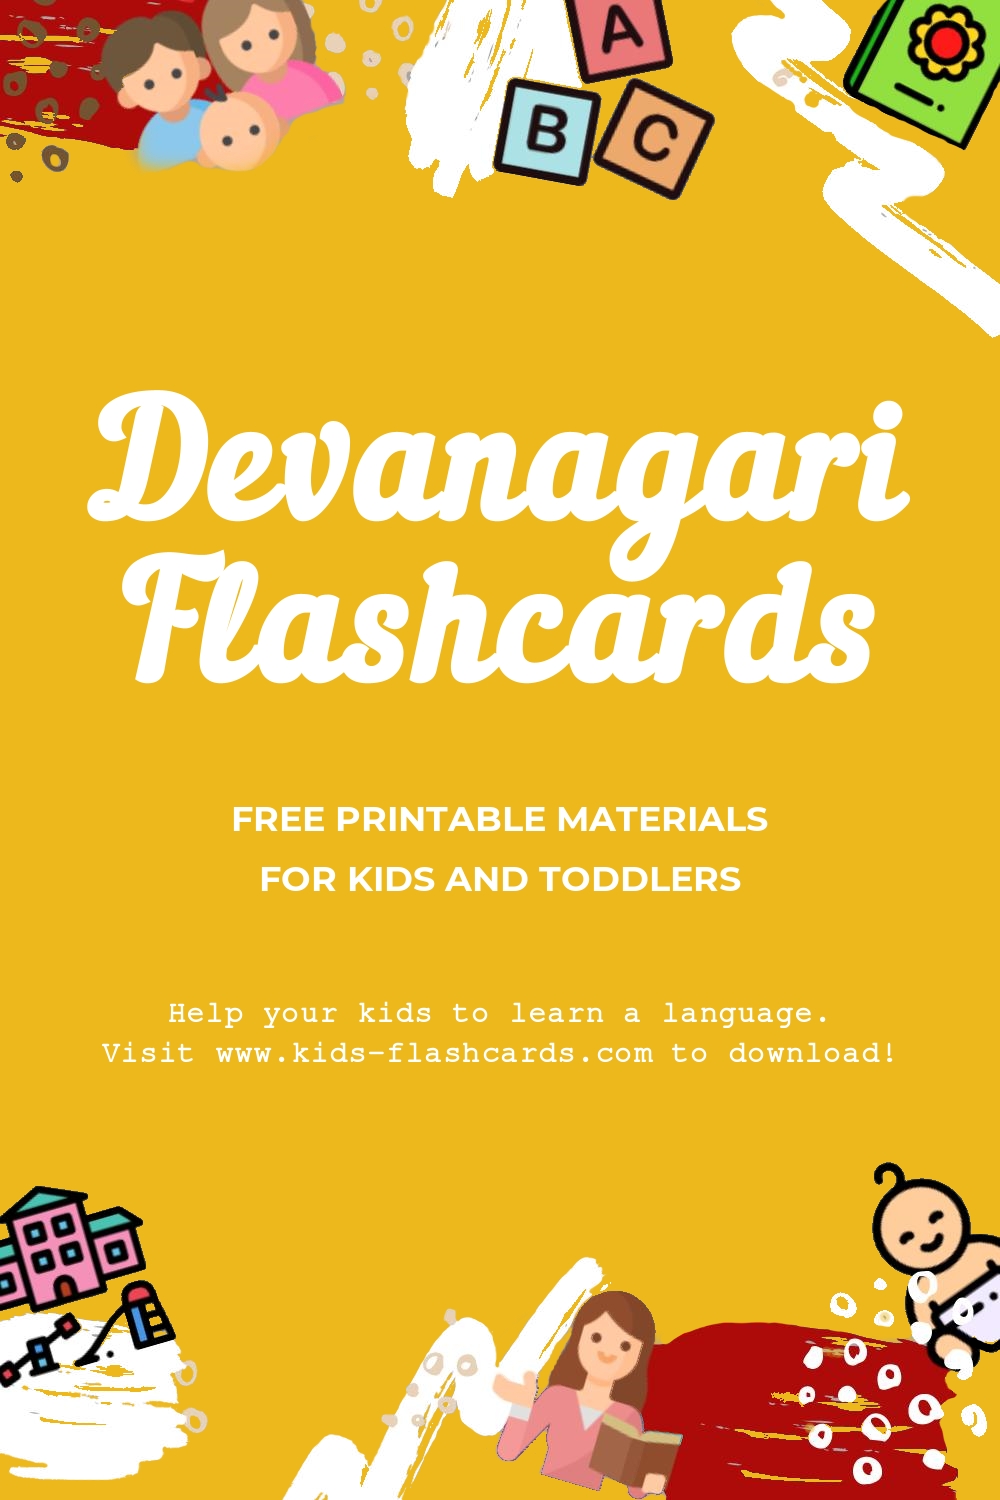 Worksheets to learn Devanagari language